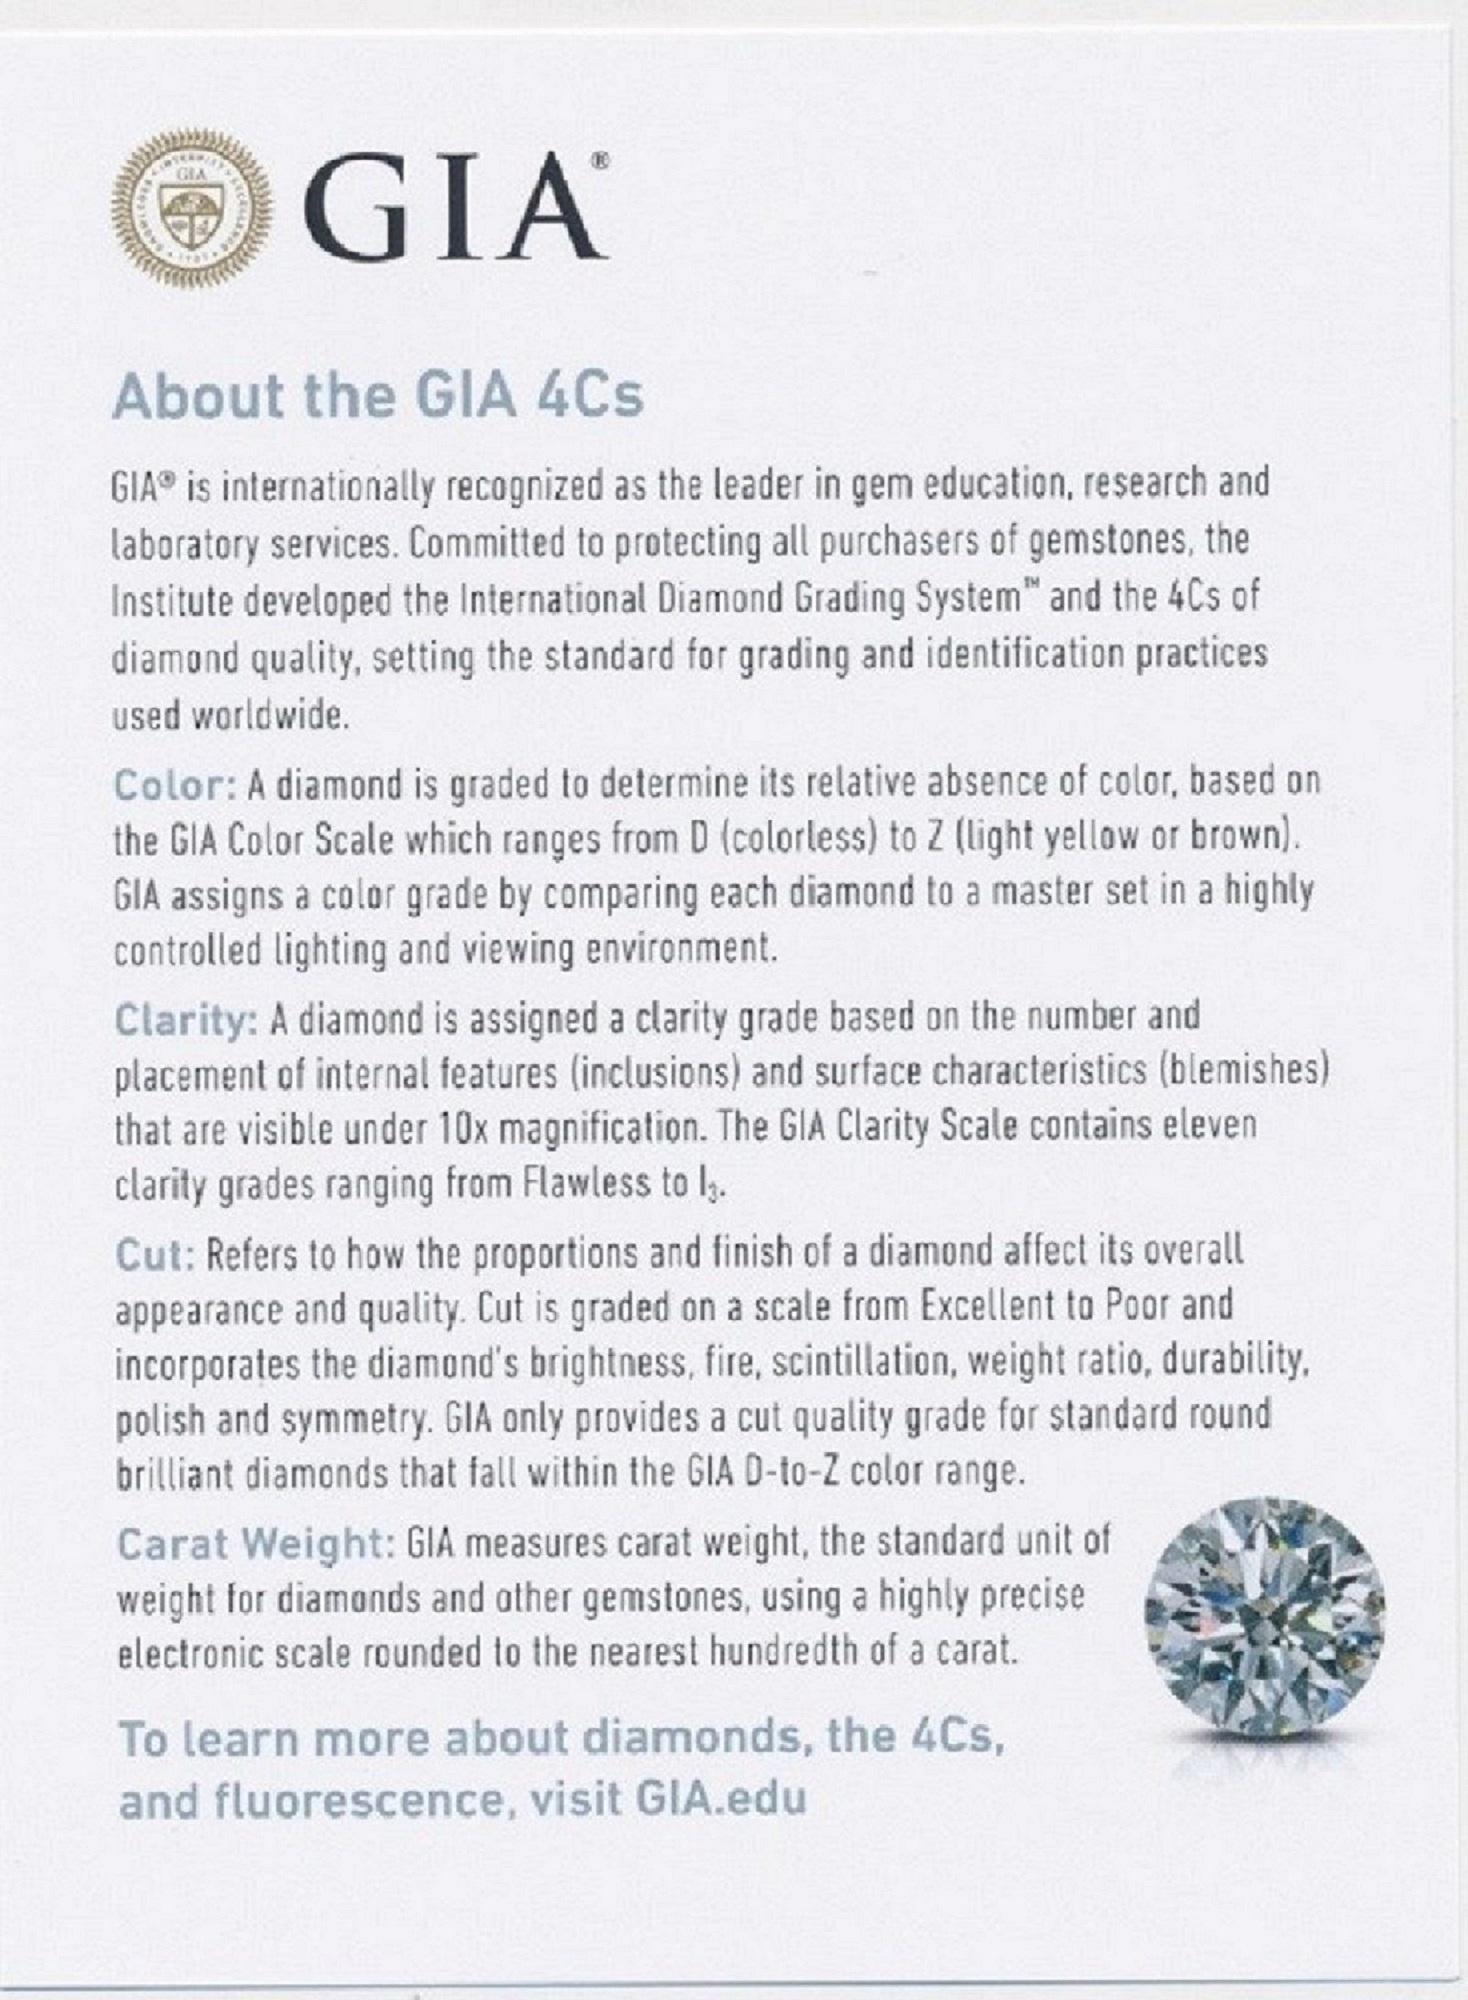 Charming 18k White Gold Three Stone Ring 1.43ct Natural Diamonds GIA Certificate 4